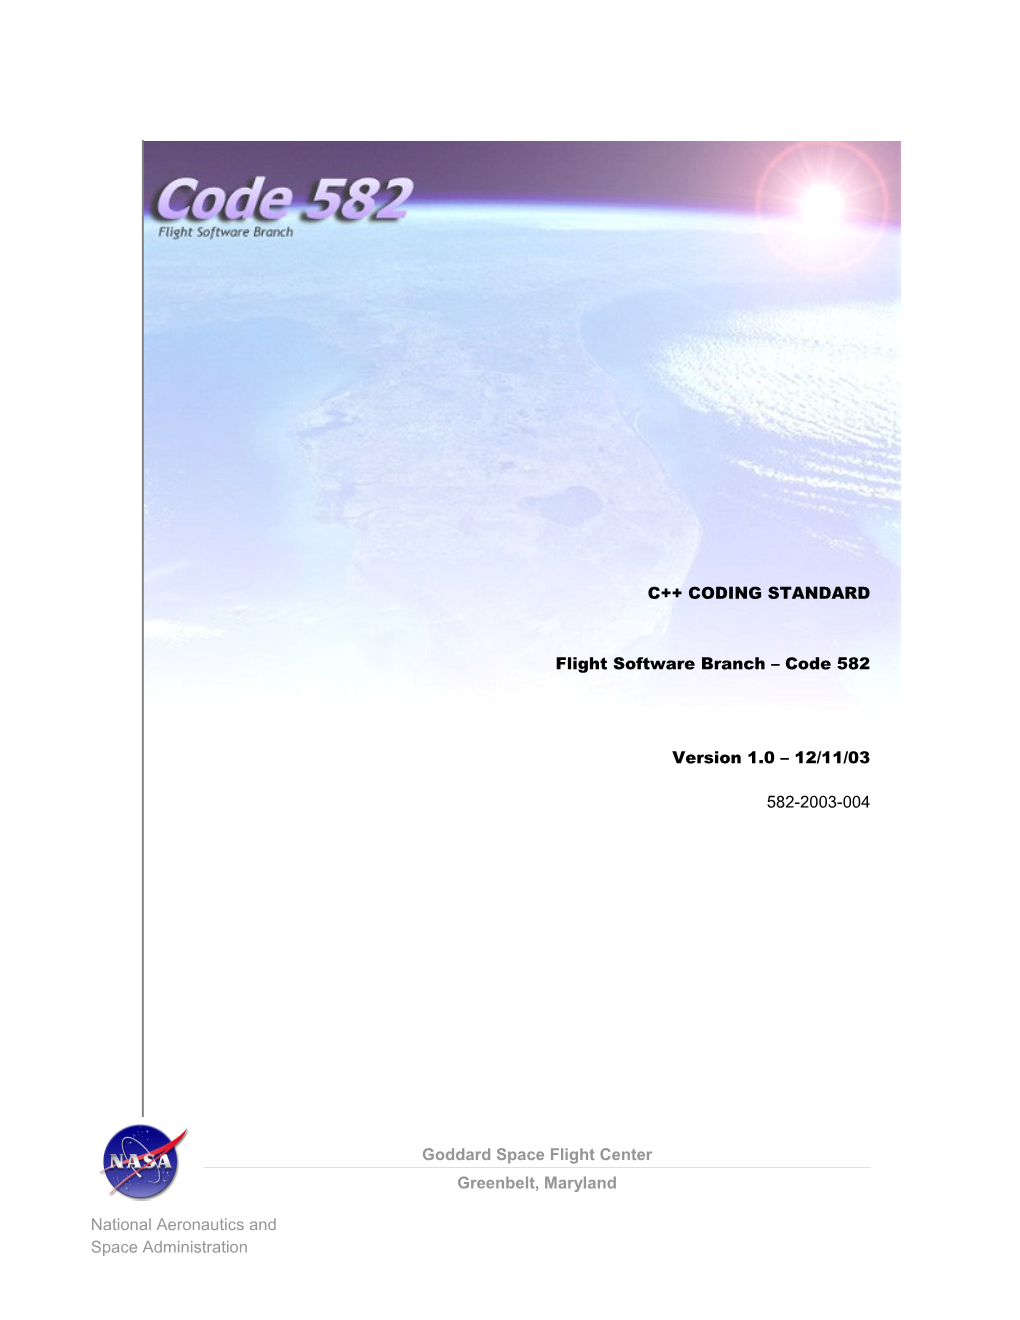 Flight Software Branch C Coding Standard - 582-2003-004 - Version 1.0 - 12/11/03 - Page 1